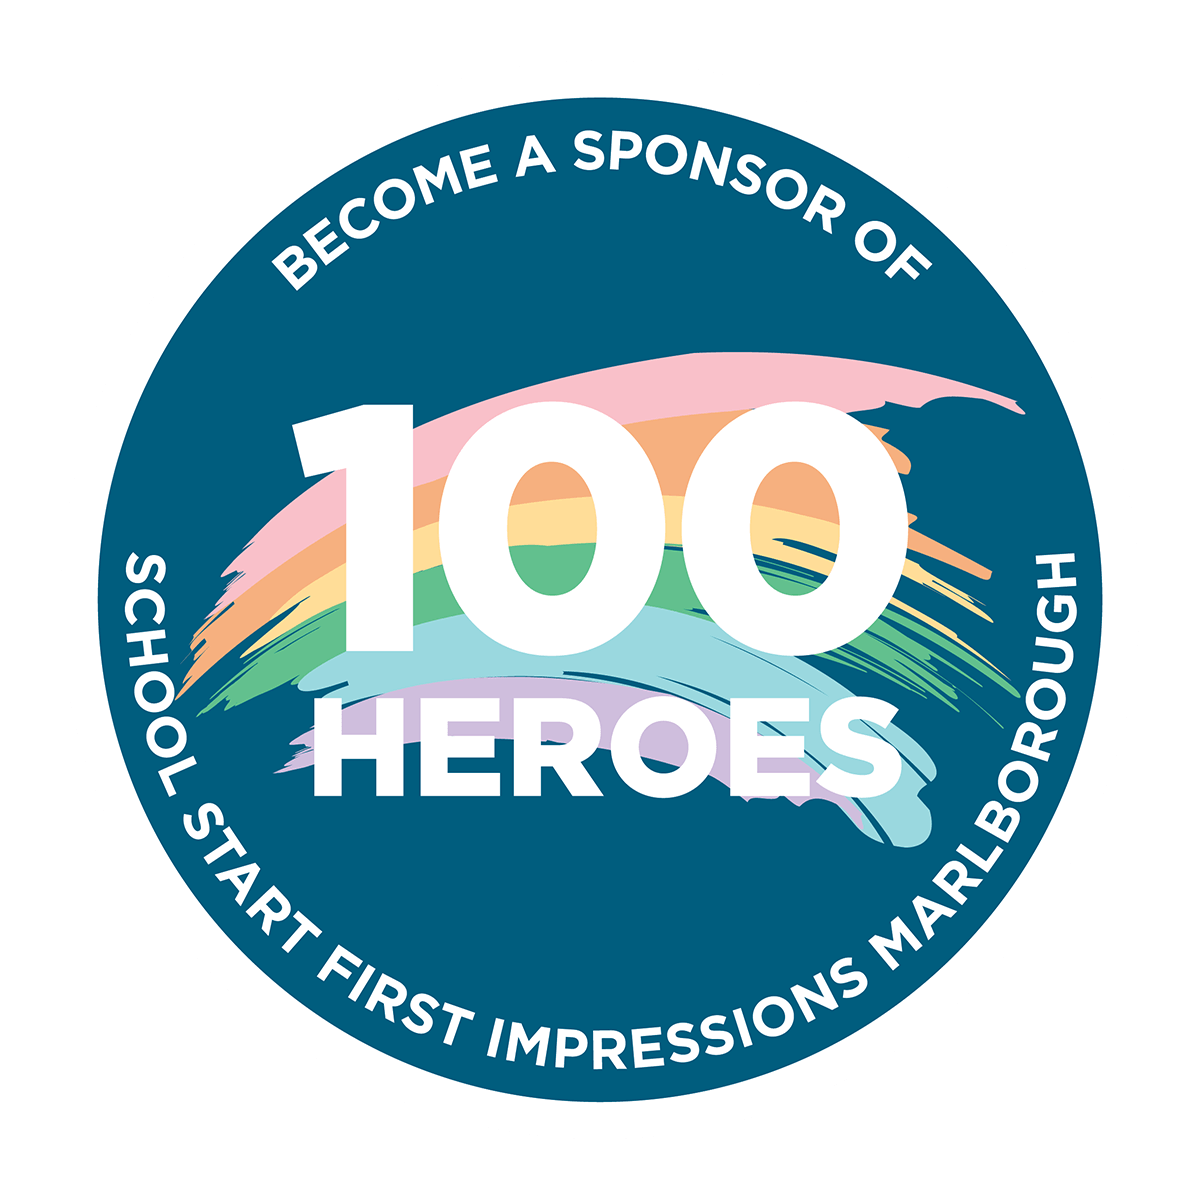 School Start First Impressions Marlborough 100 Heroes Club Become A Sponsor